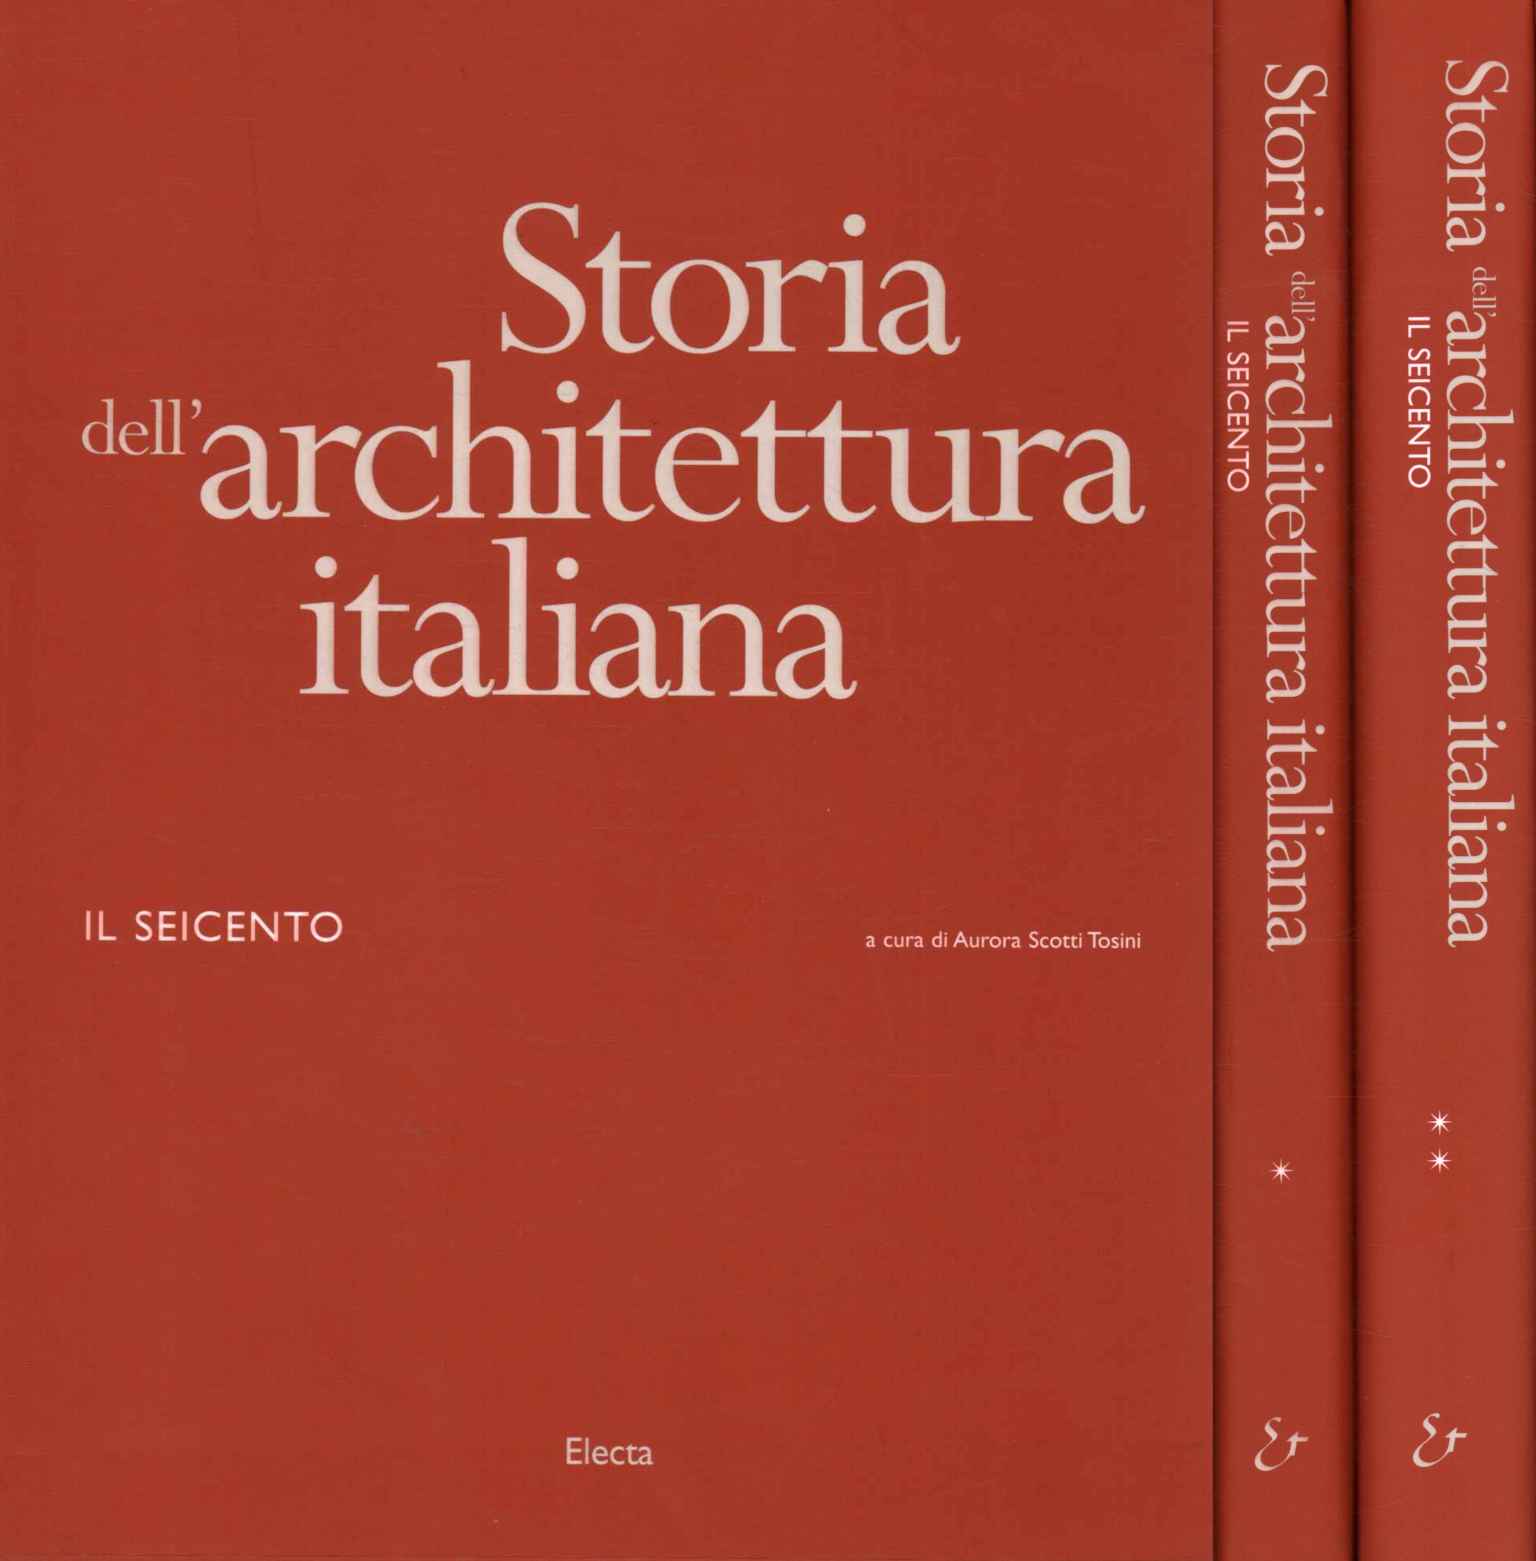 Histoire de l'architecture italienne.%,Histoire de l'architecture italienne.%,Histoire de l'architecture italienne.%